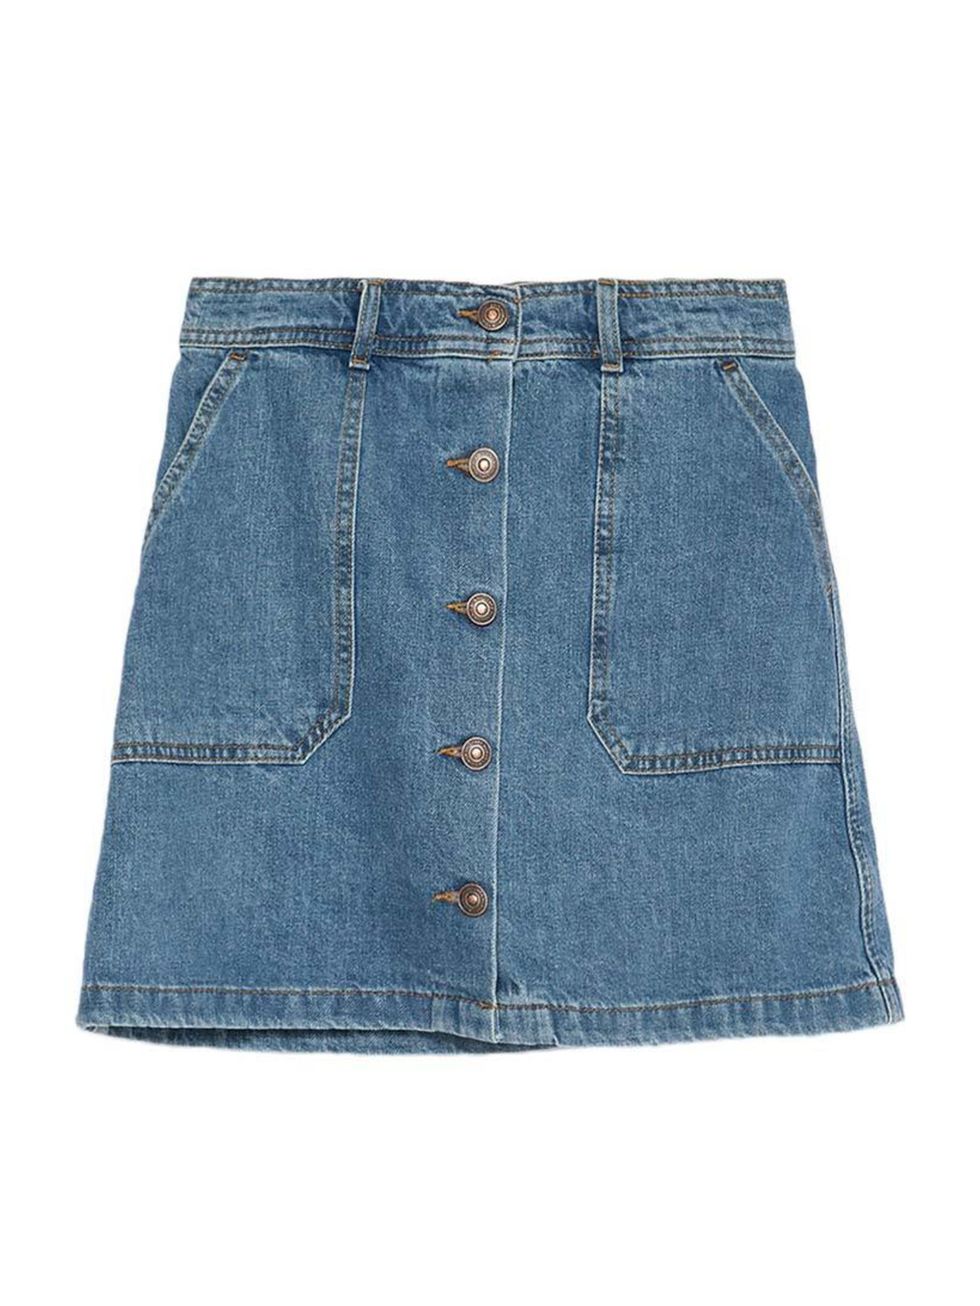 <p>Editorial Assistant Gillian Brett is embracing the double-denim trend for summer.</p>

<p><a href="http://www.zara.com/uk/en/new-this-week/woman/mini-skater-skirt-c363008p2775678.html" target="_blank">Zara</a> mini skirt, £29.99</p>